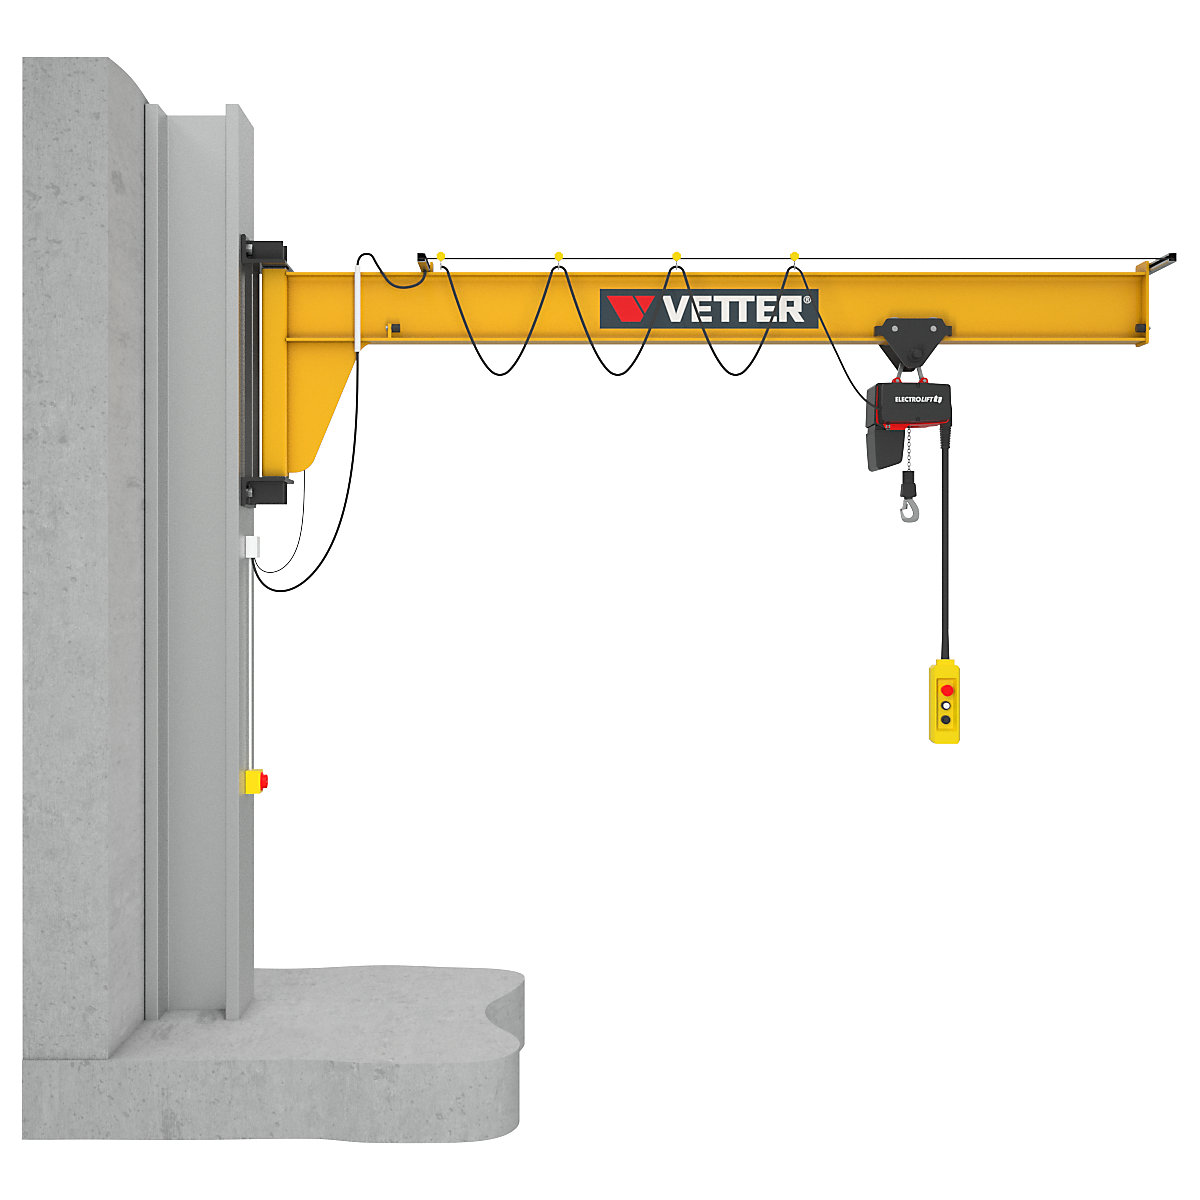 ASSISTENT AW wall mounted jib crane - Vetter